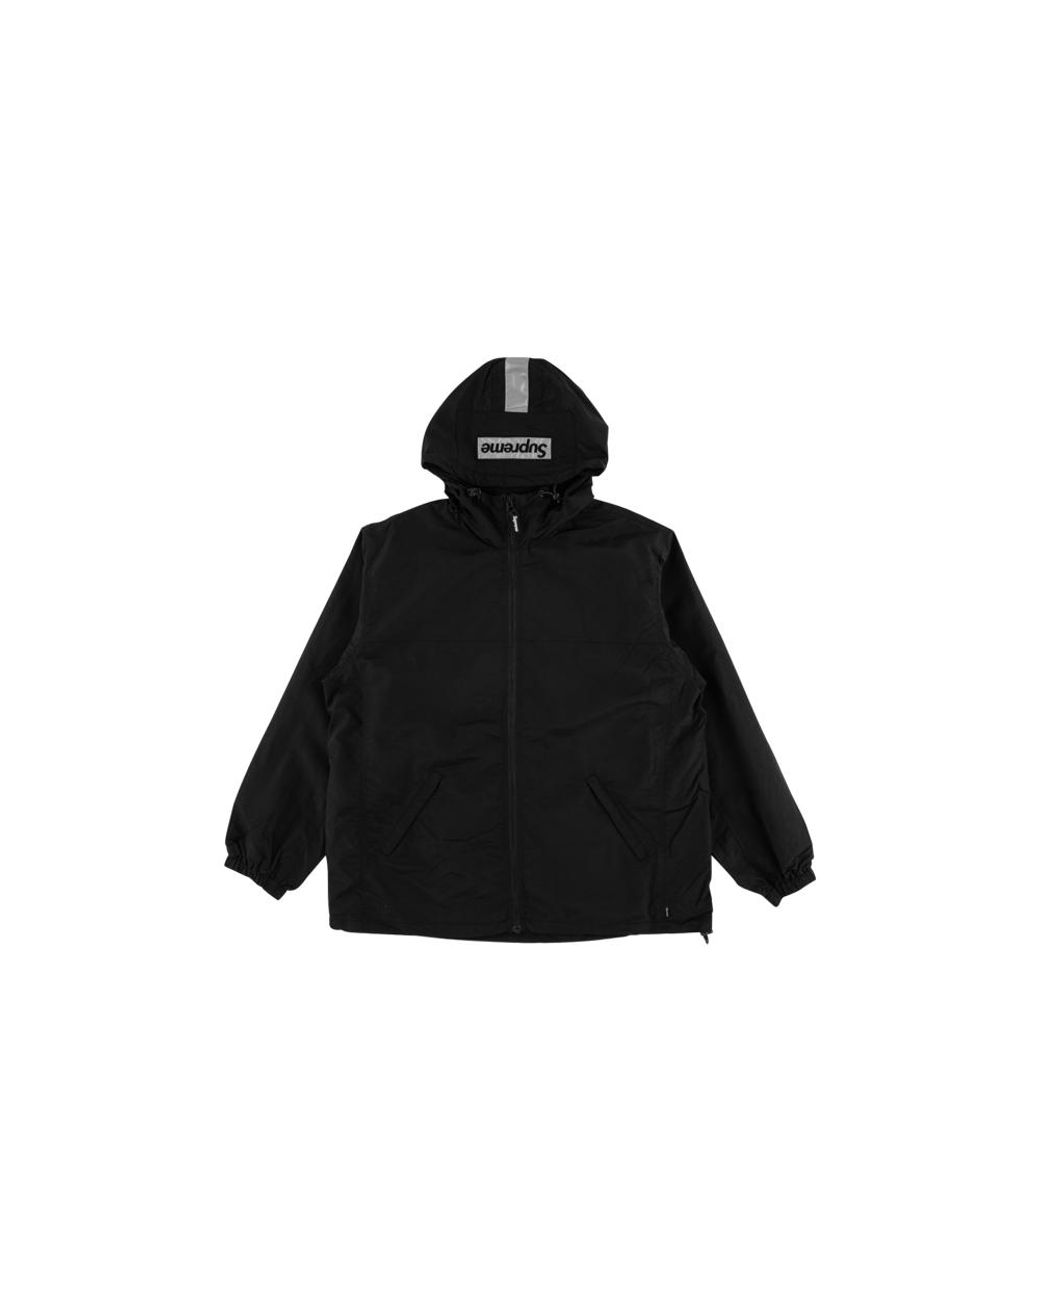 supreme 2 tone zip up jacket